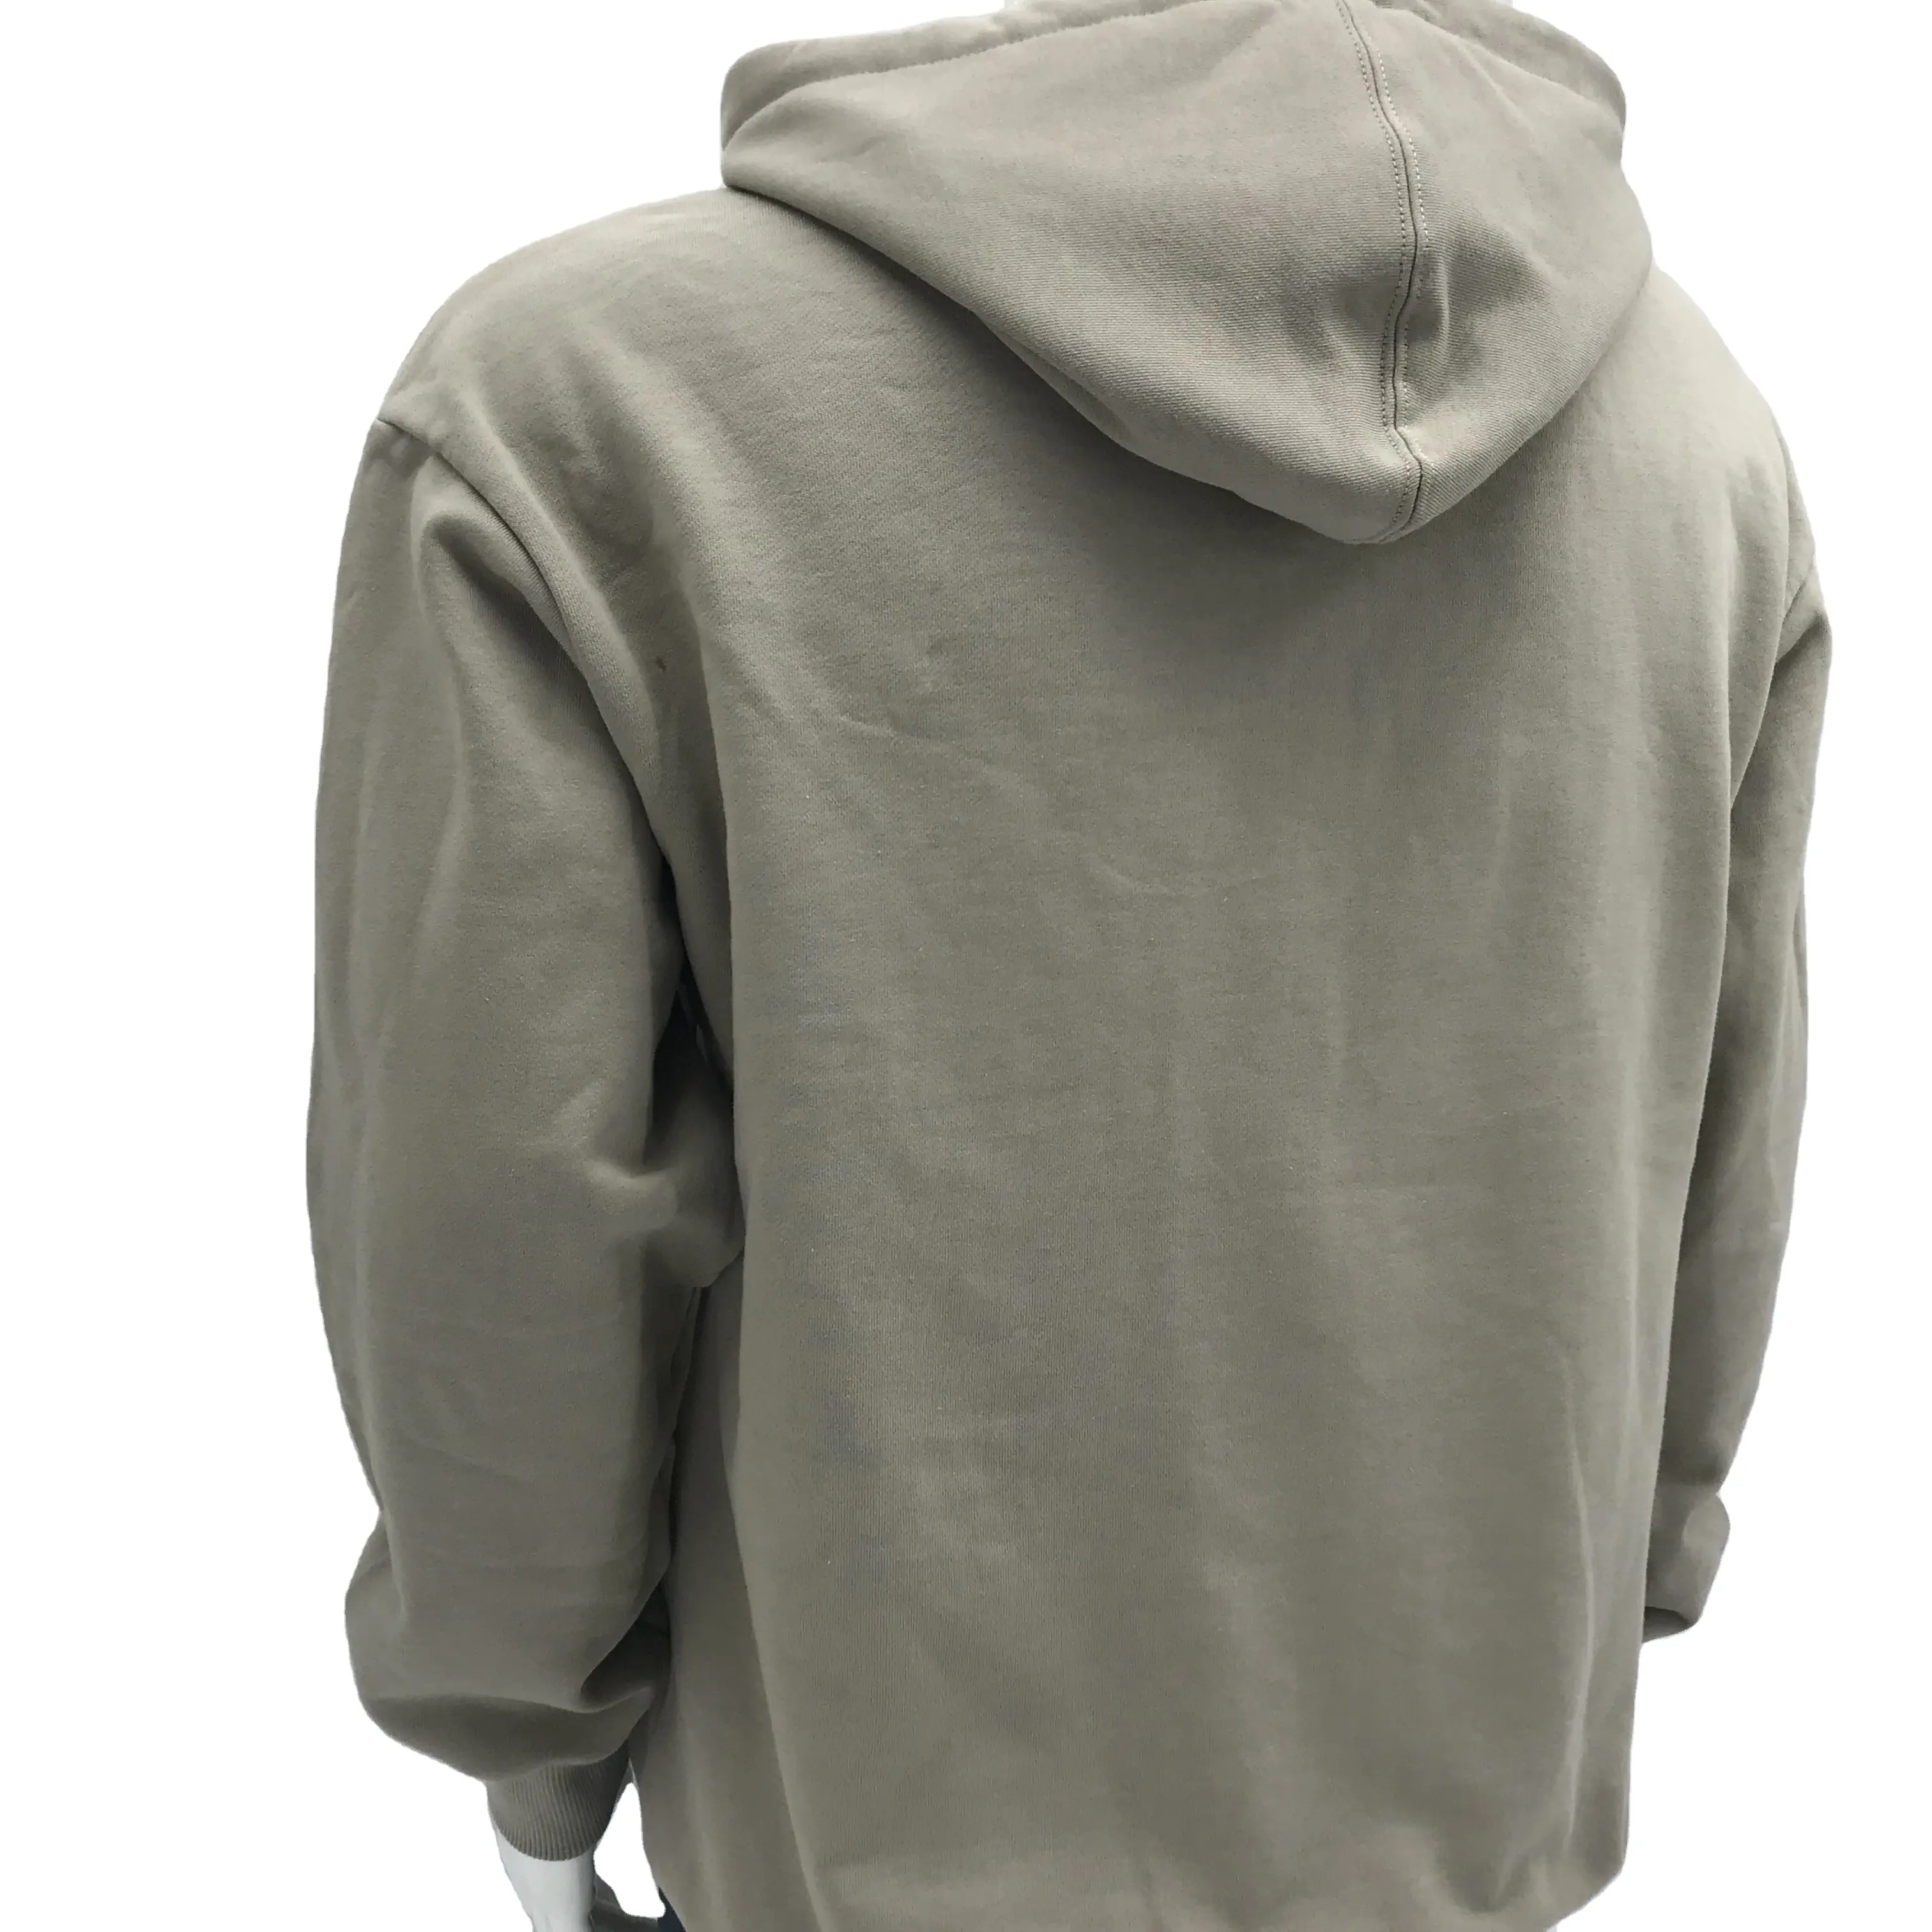 Men's hoodies & sweatshirts High quality fabric custom your own logo essentials hoodie blank plain design men's hoodies